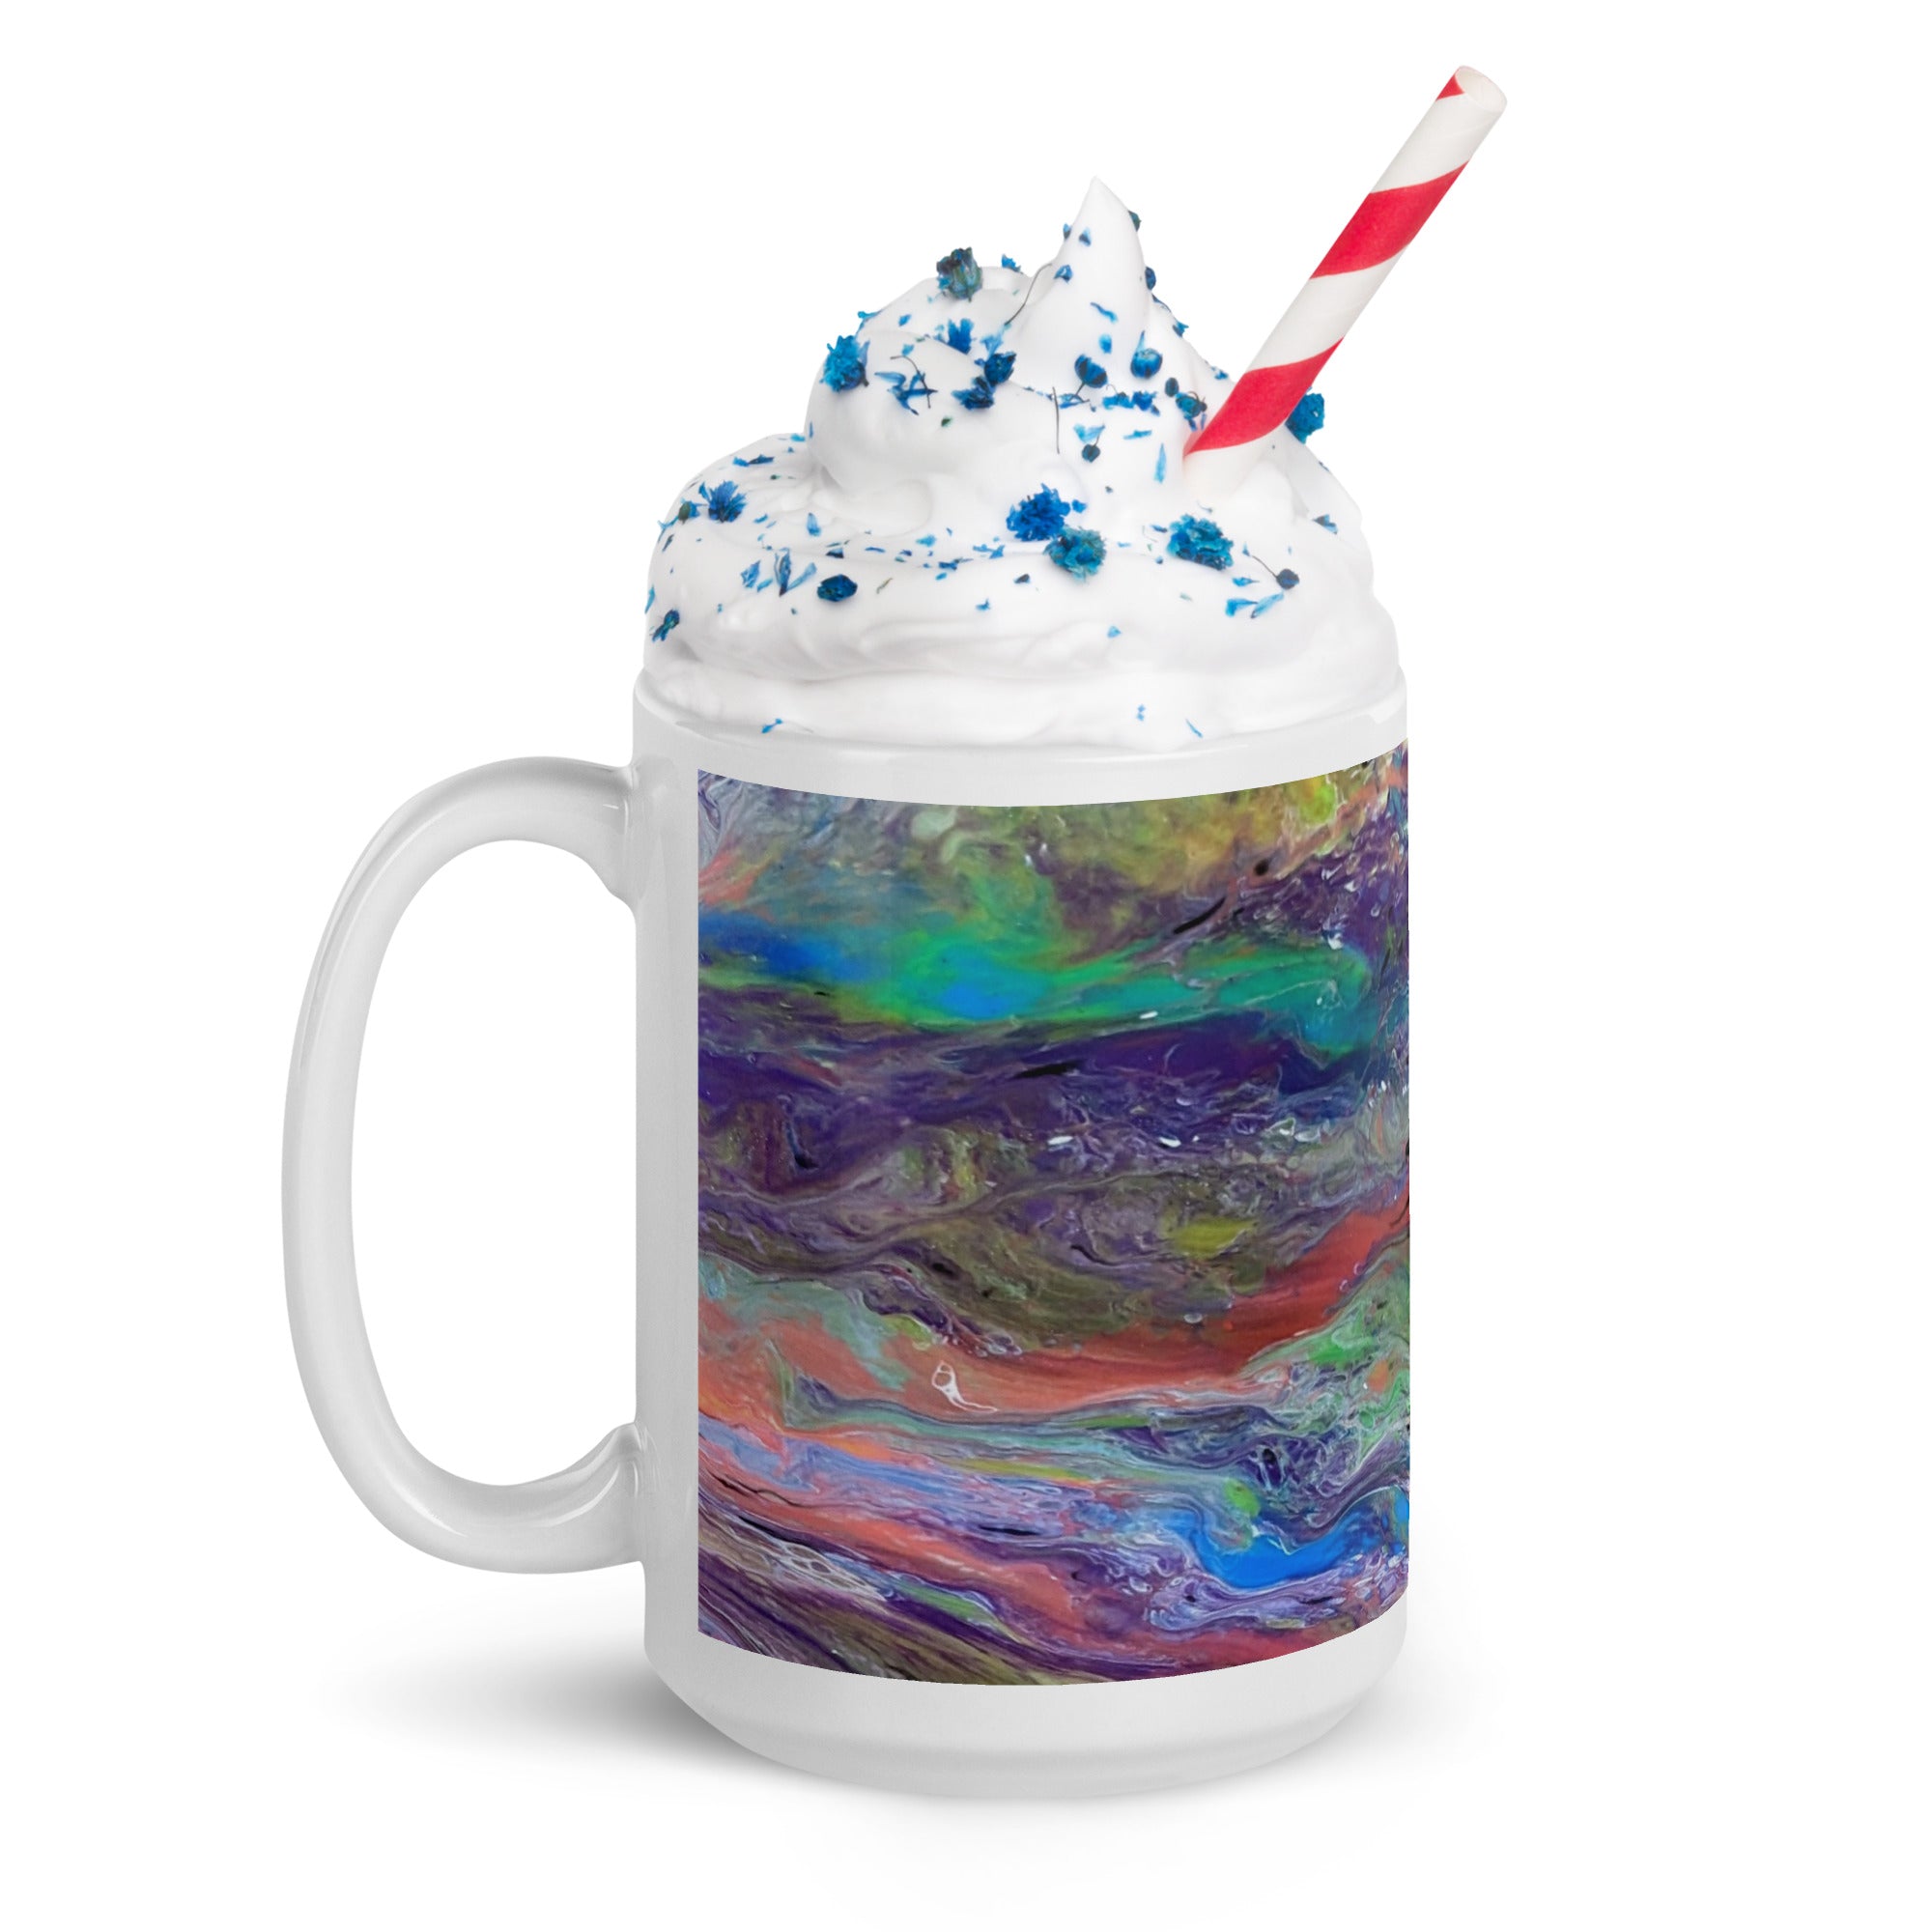 Rainbow's Peak Pour Painting Ceramic Mug, Glossy Mug, Fluid Art, Acrylic Pour Painting, Abstract Art, Gift, Paint Mug, Coffee Cup, Drinkware